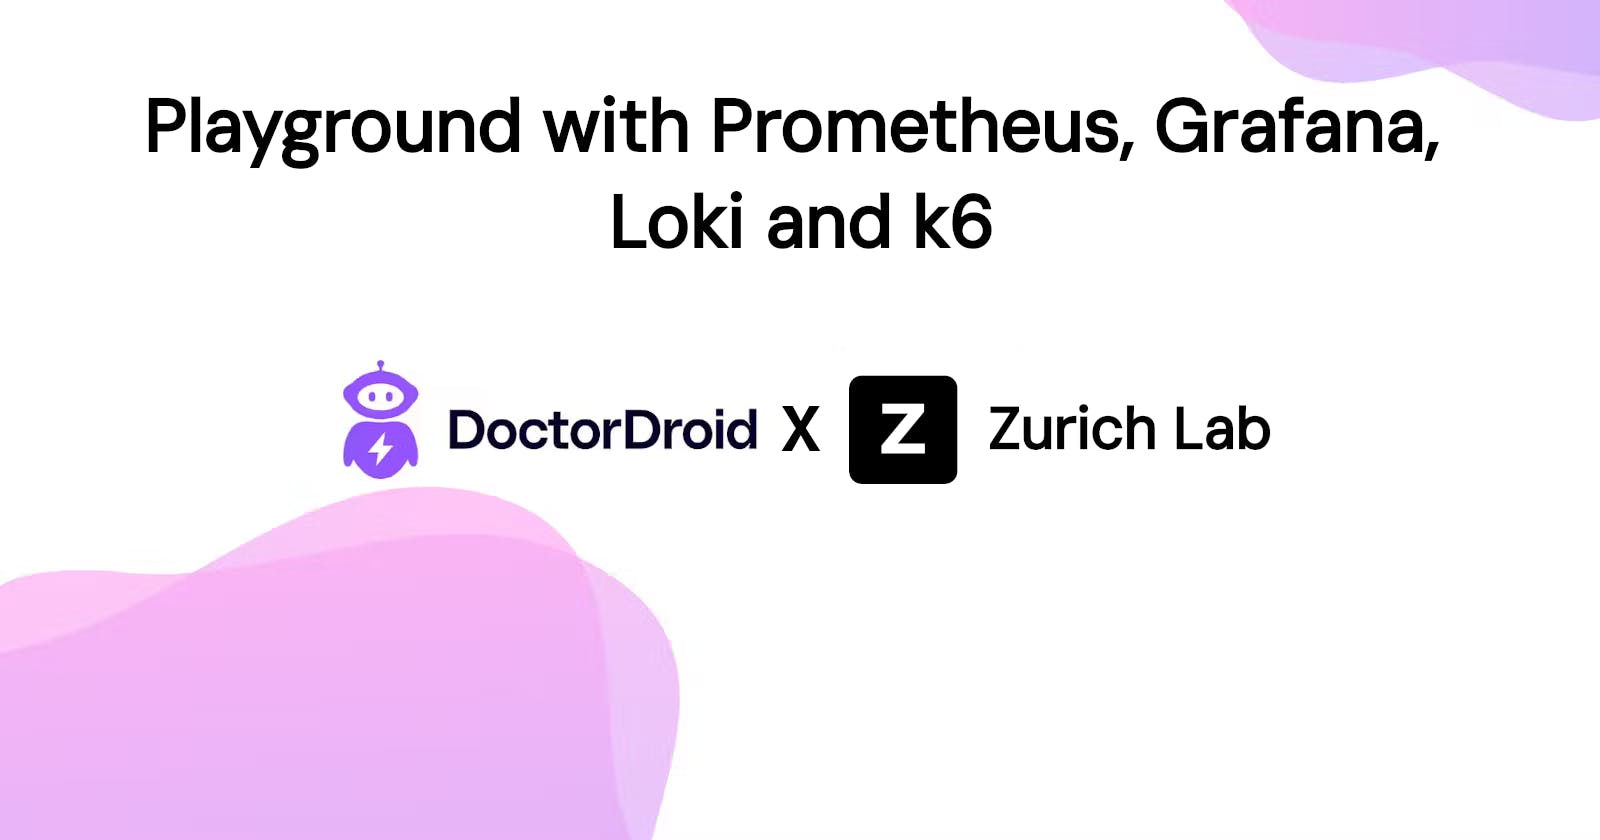 Playground with Prometheus, Grafana, Loki and k6